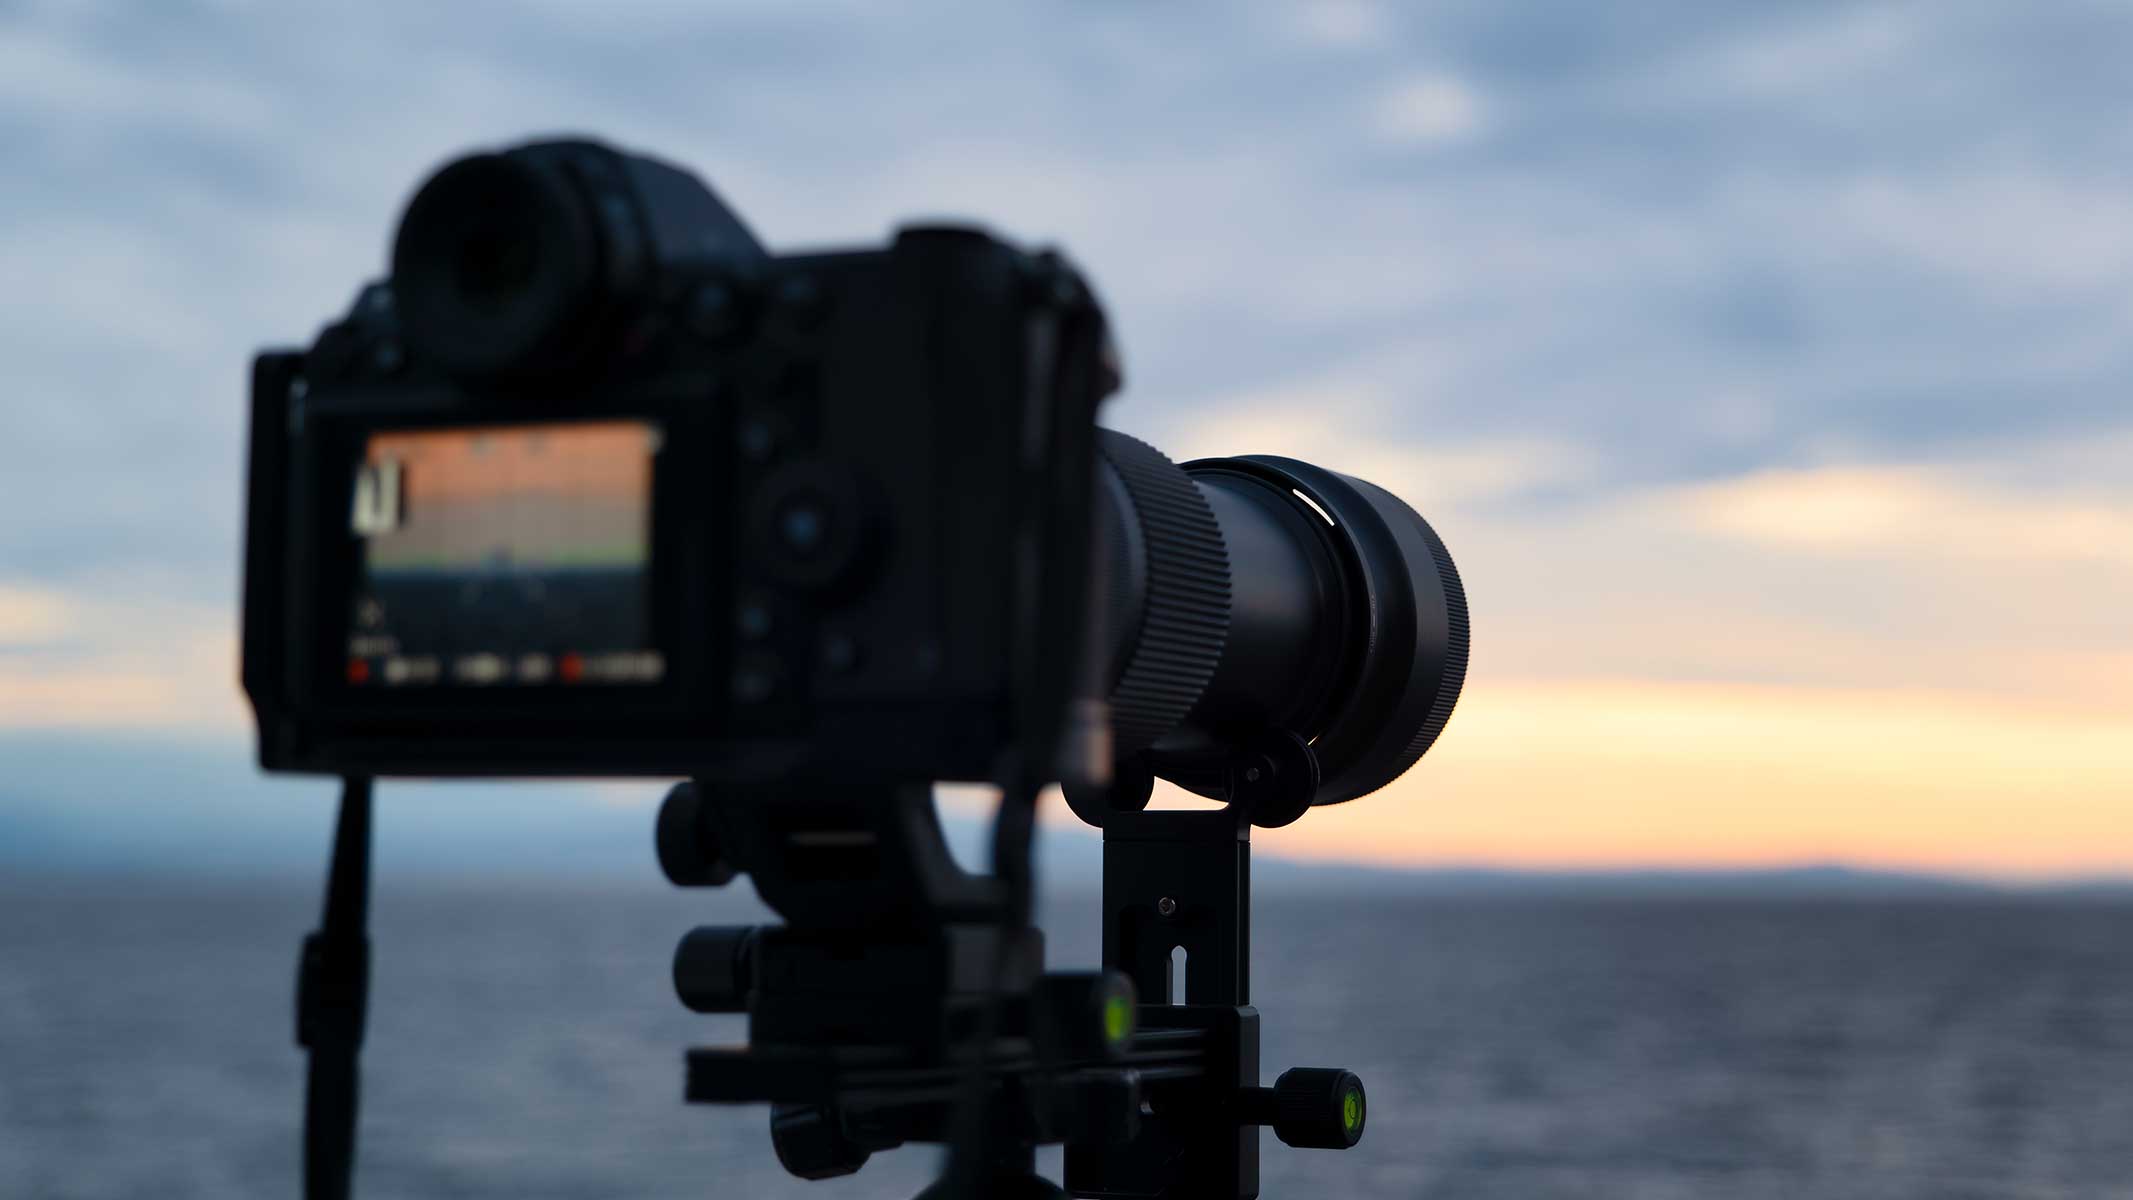 Mirrorless camera on tripod at dusk